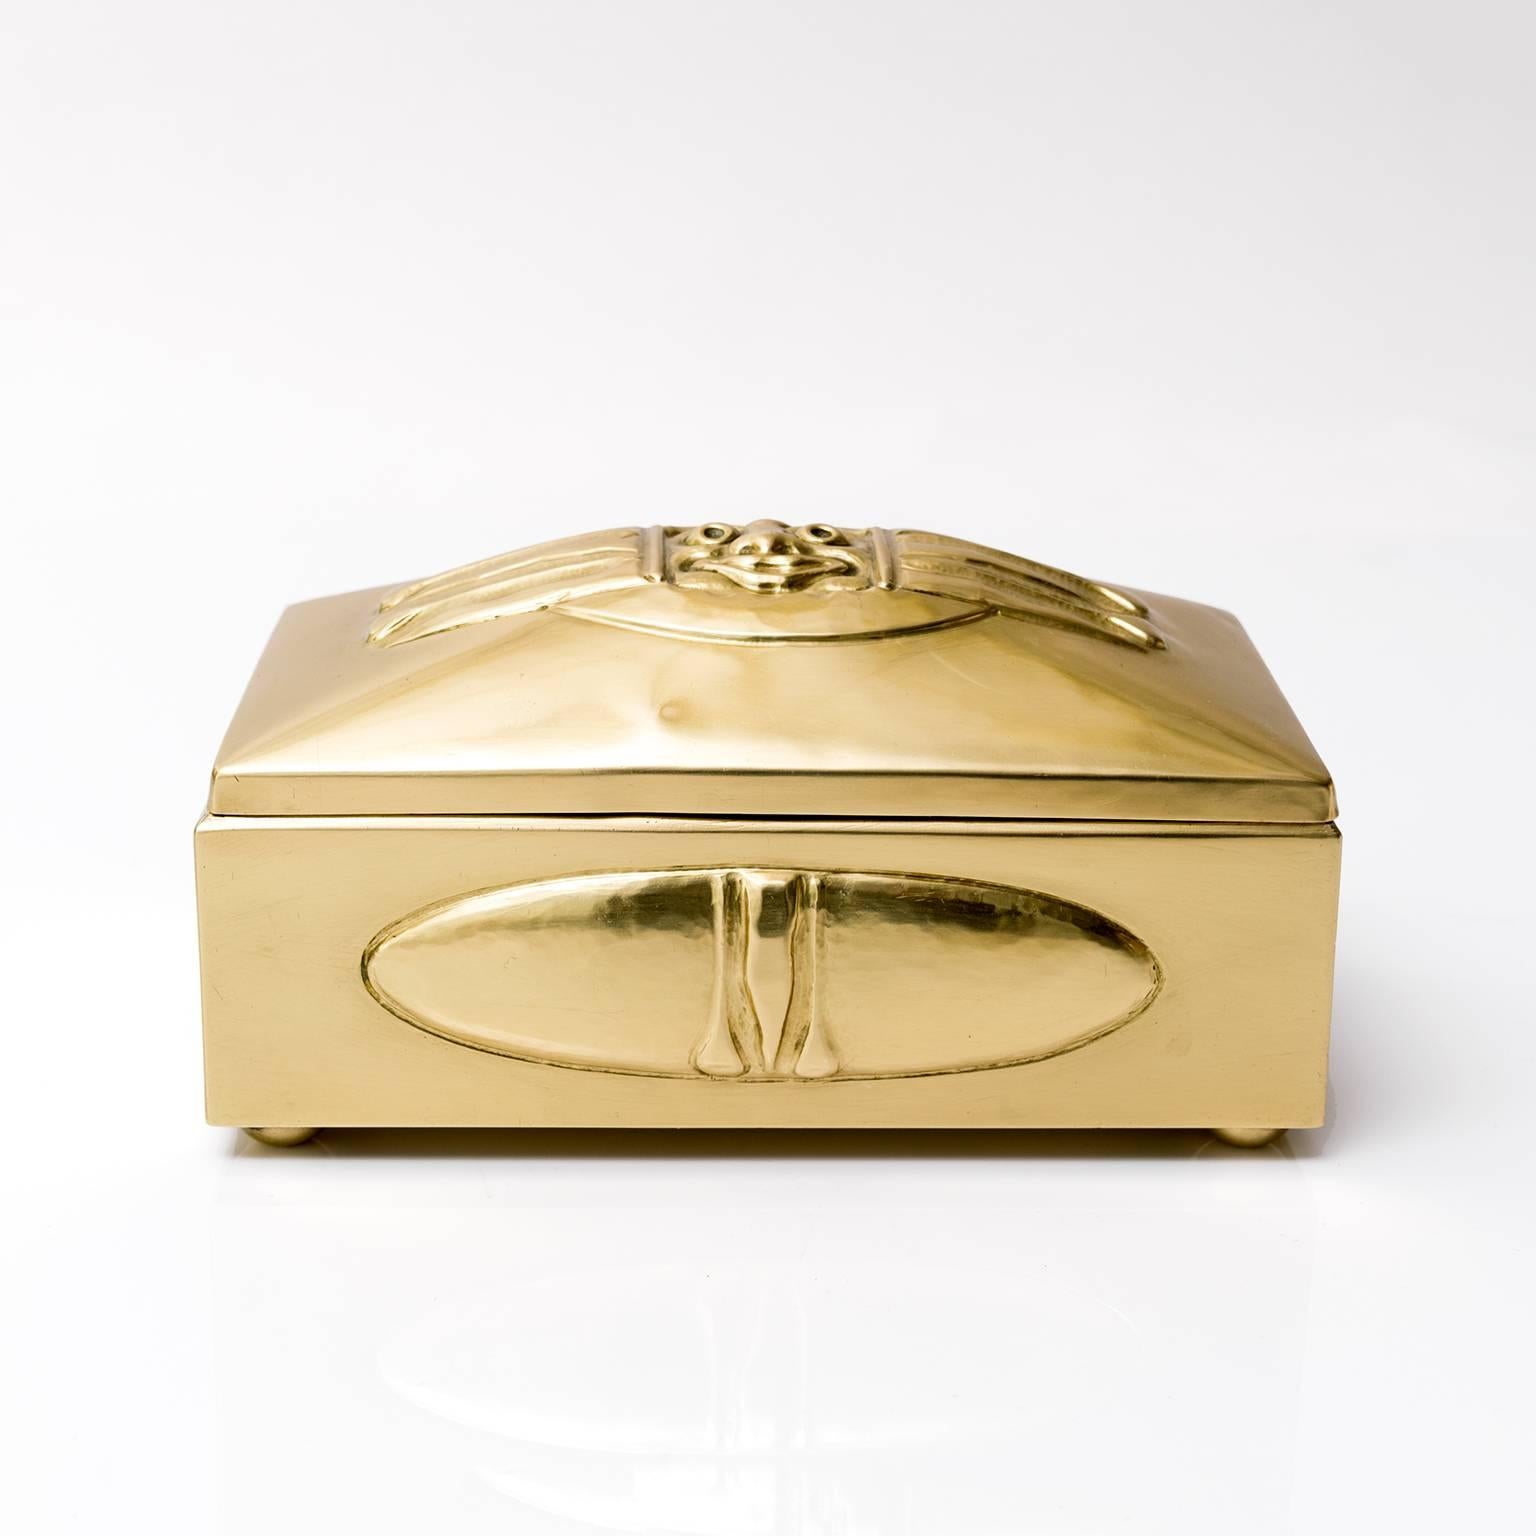 Hand-Crafted Scandinavian Modern, Art Nouveau, Jugend polished  Brass Box with face 